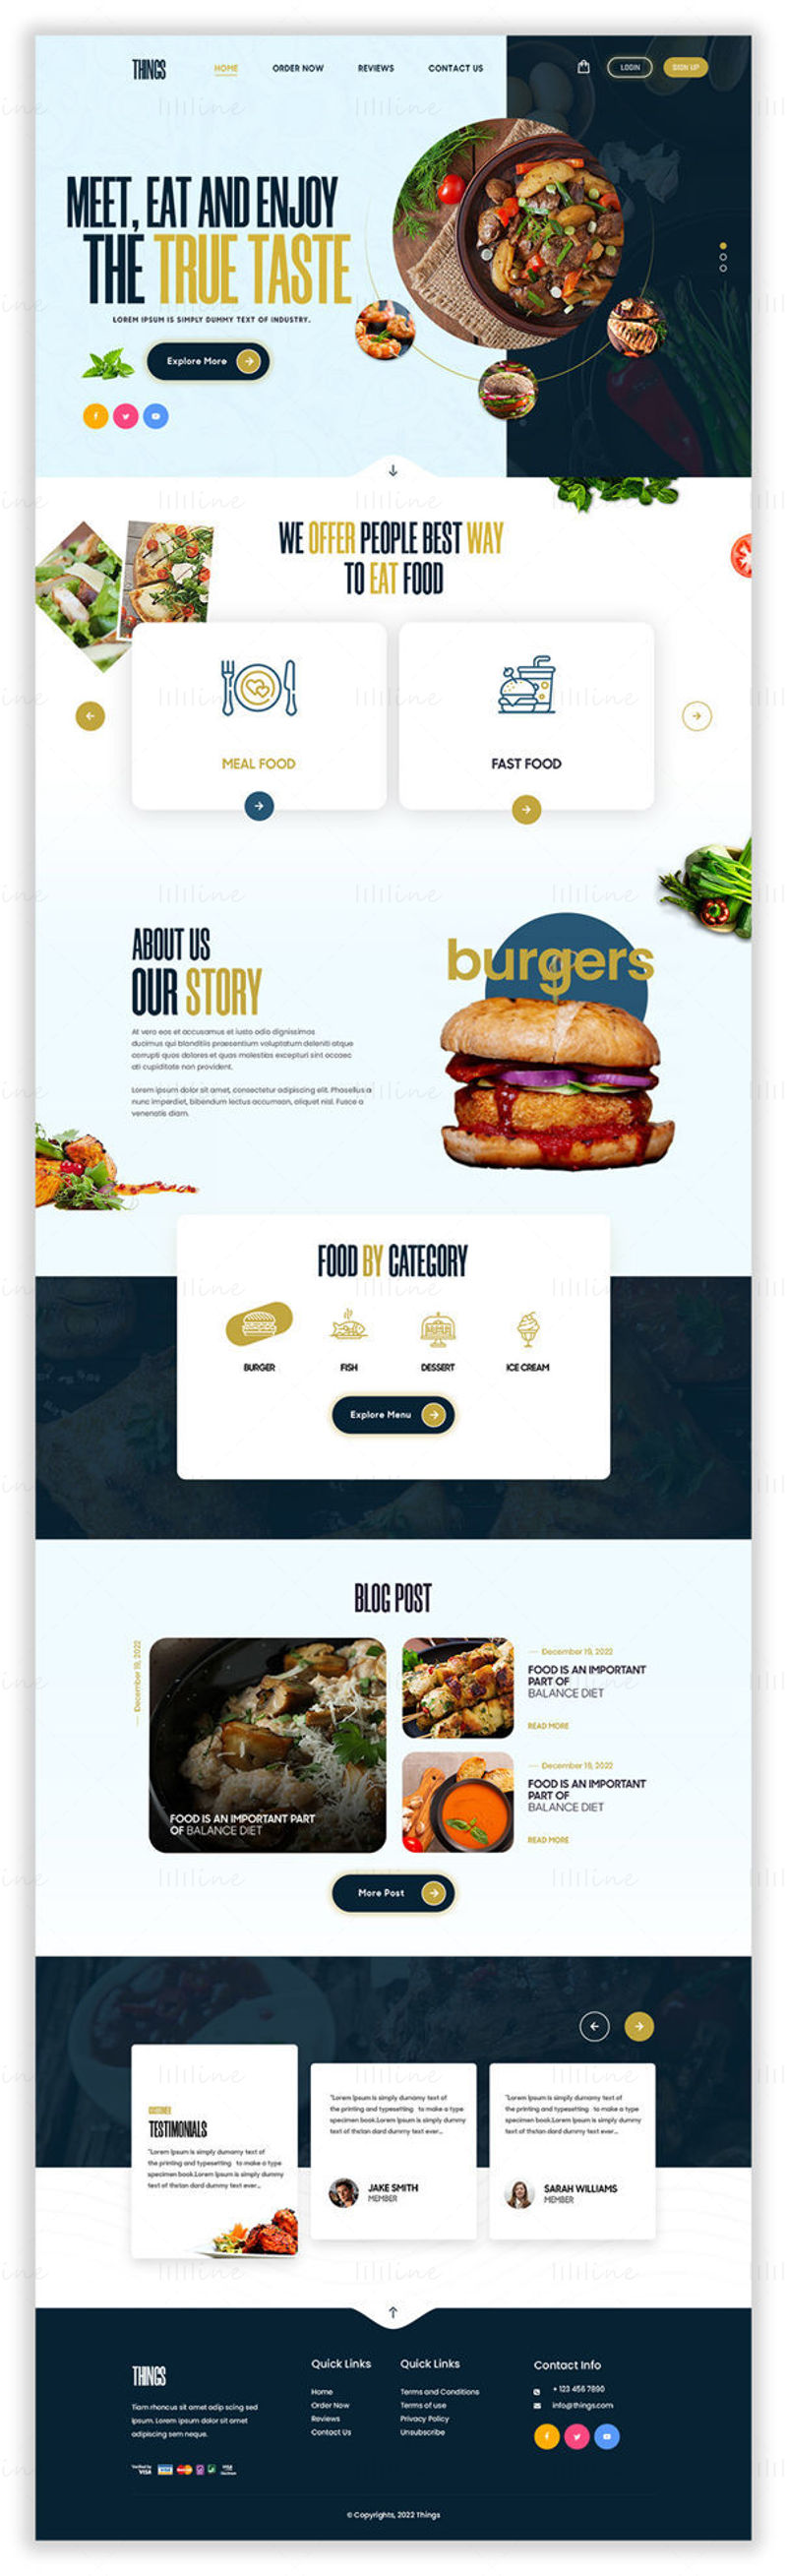 Modelo de comida de coisas - UI Adobe Photoshop